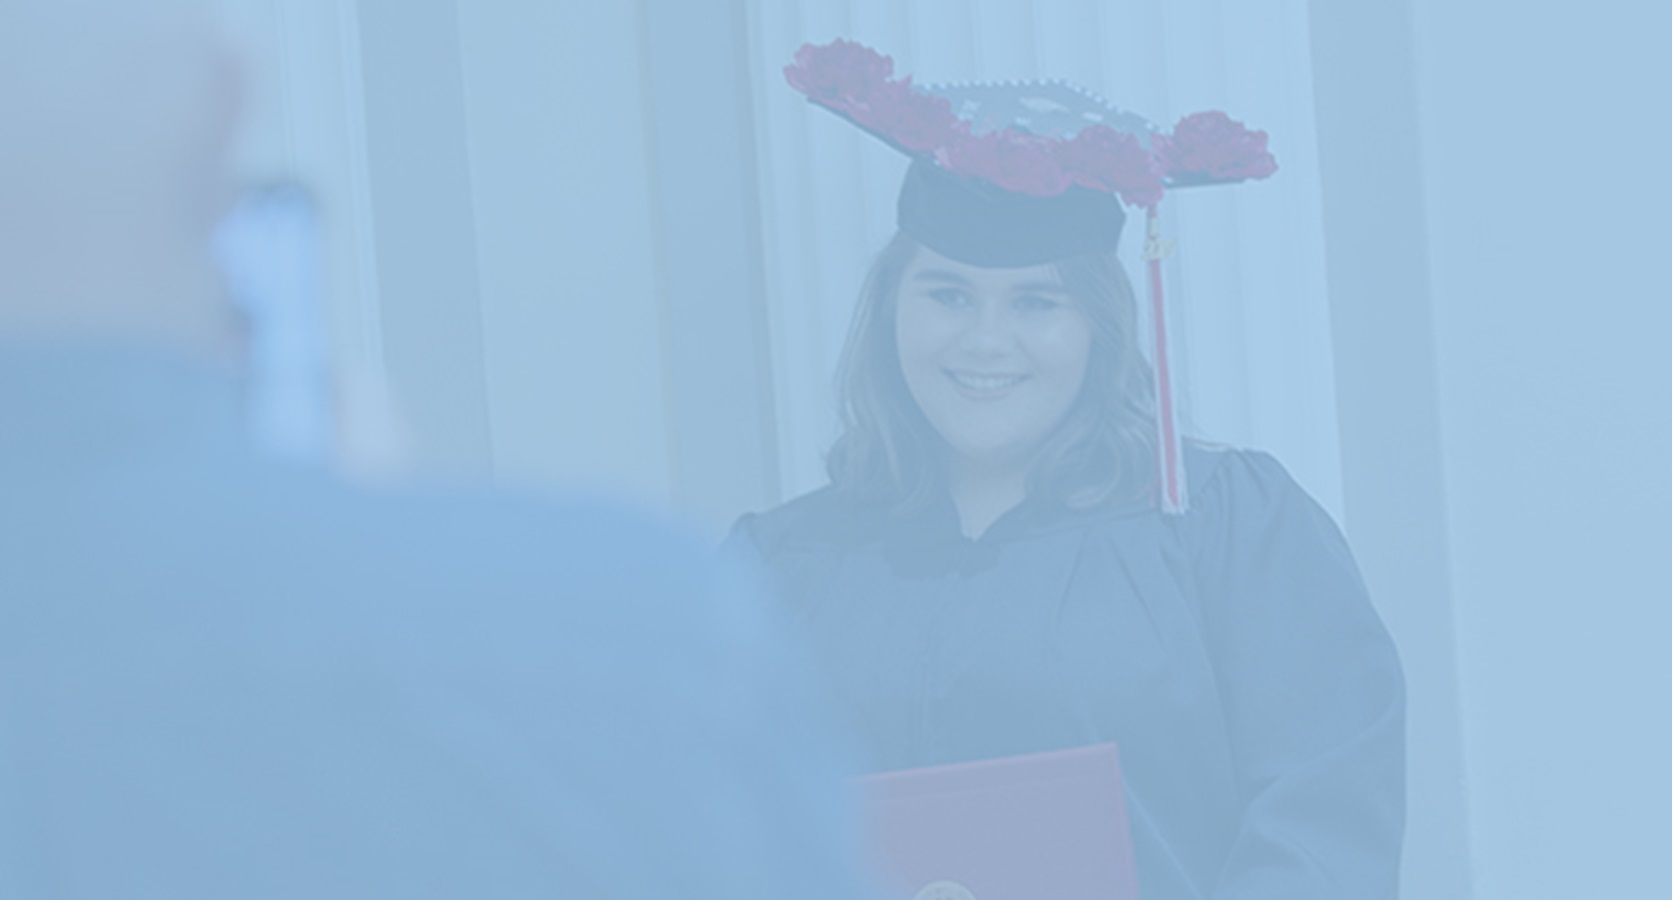 Graduate Expressions image, graduate wearing decorated cap smiling at camera, Virtual Graduation Experience 2021 